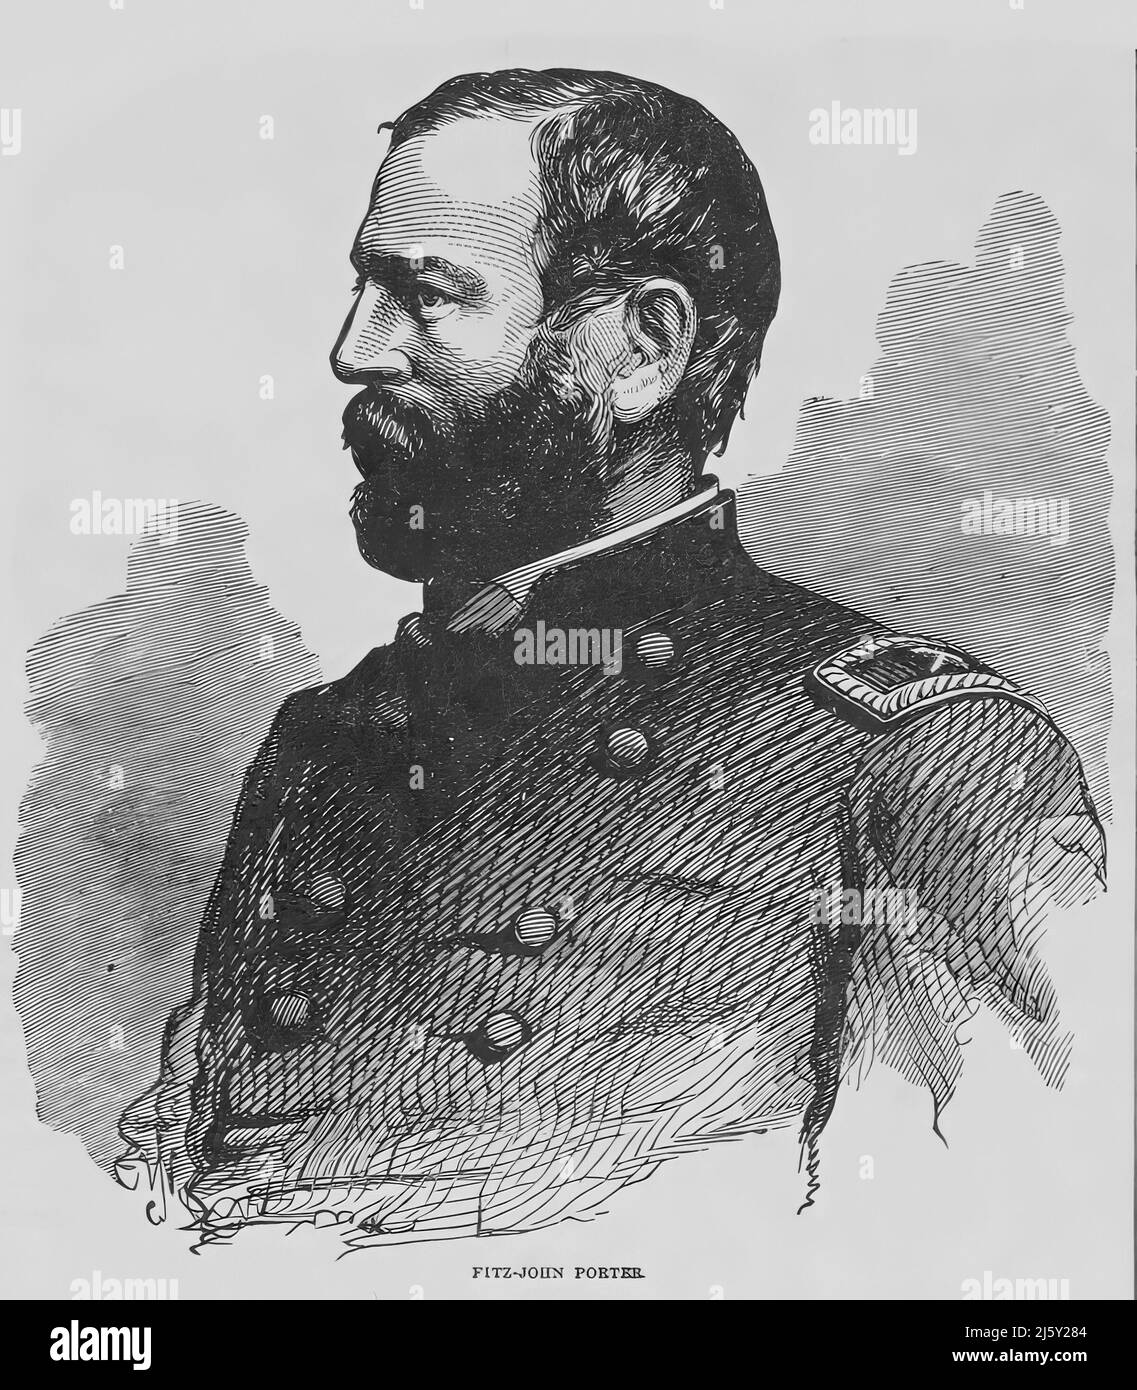 Portrait of Fitz-John Porter, Union Army General in the American Civil War. 19th century illustration. Stock Photo